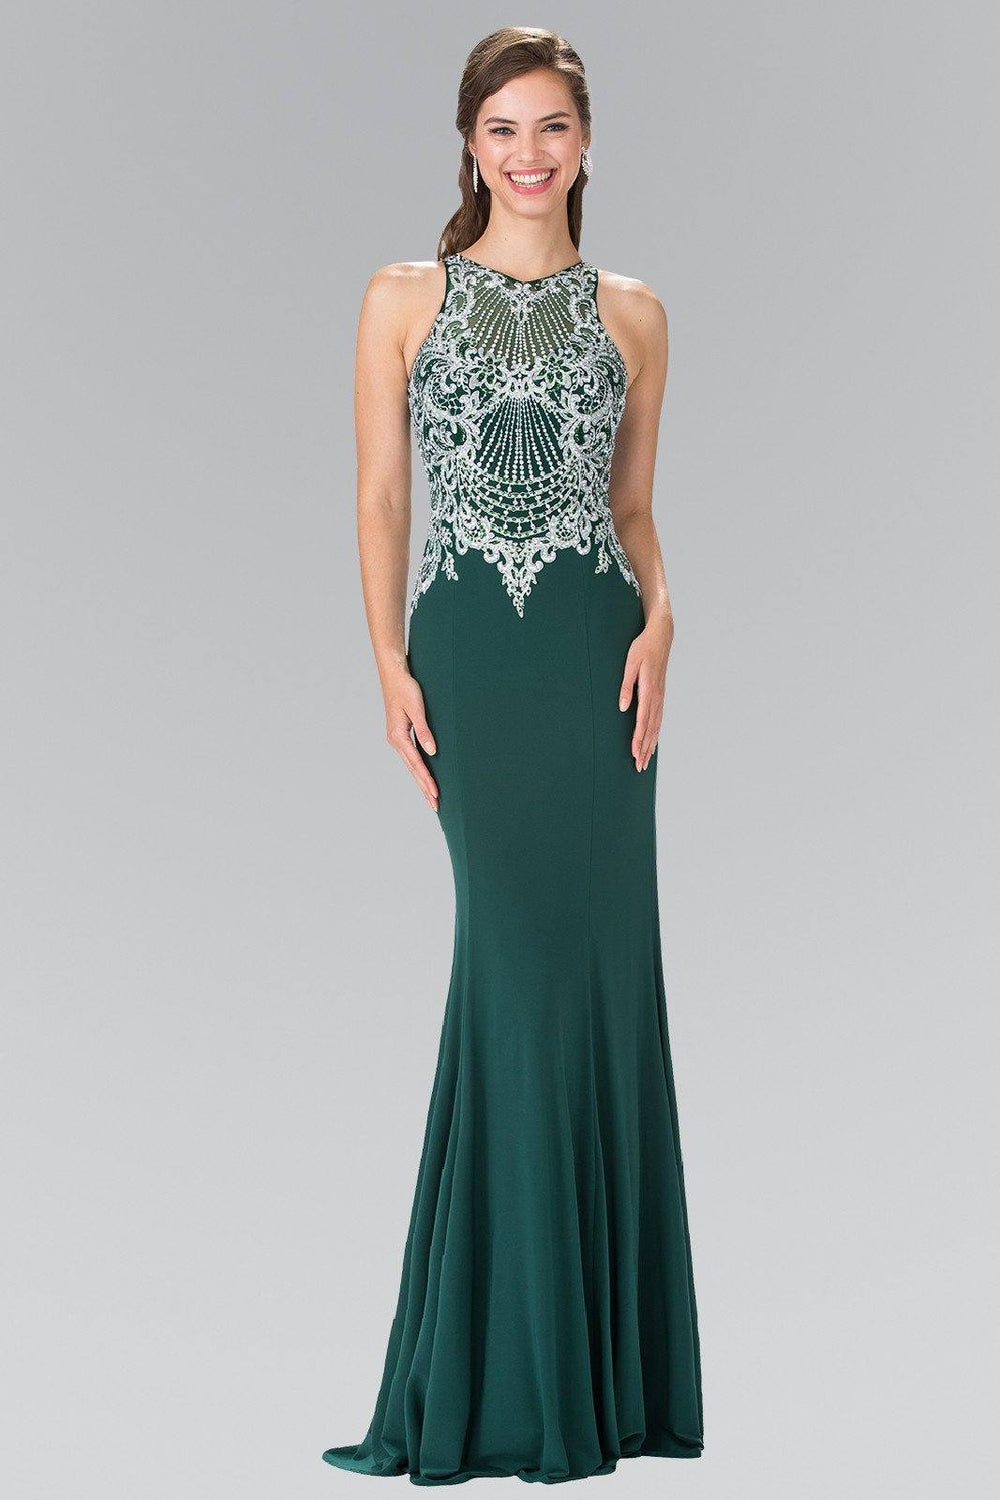 Long Sleeveless Dress with Illusion Bodice by Elizabeth K GL2232-Long Formal Dresses-ABC Fashion